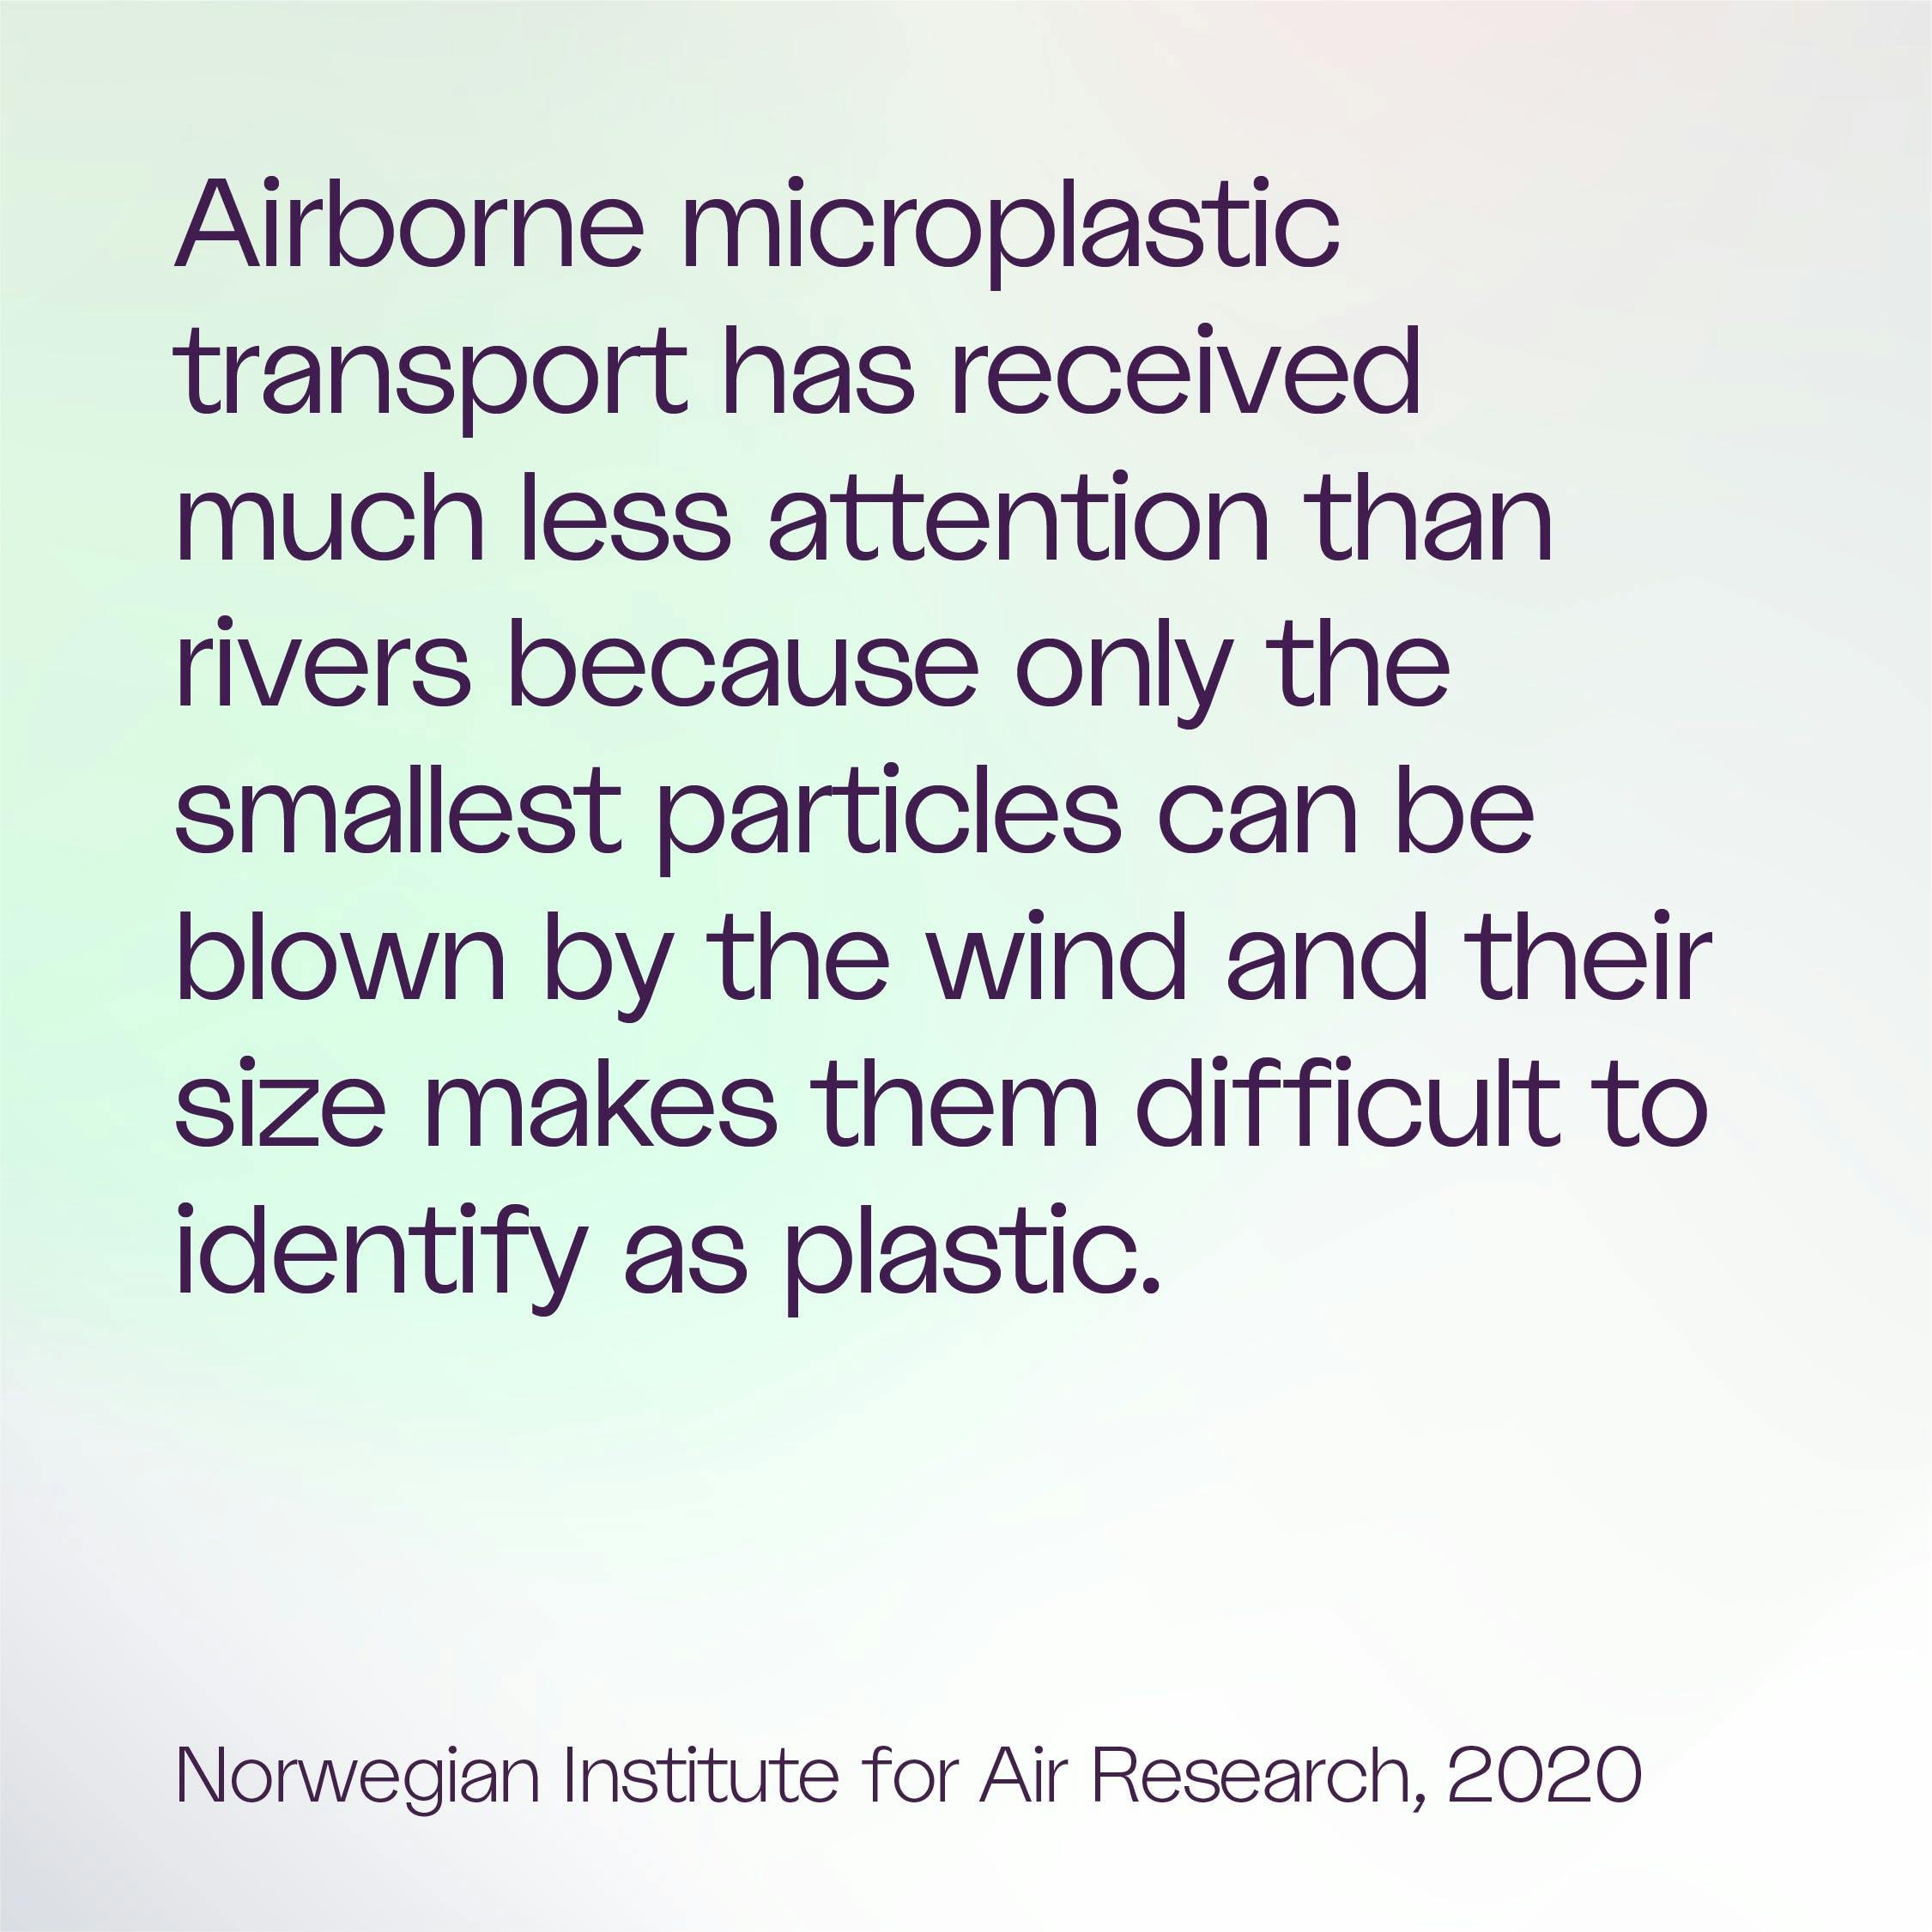 Source: Norwegian Institute for Air Research